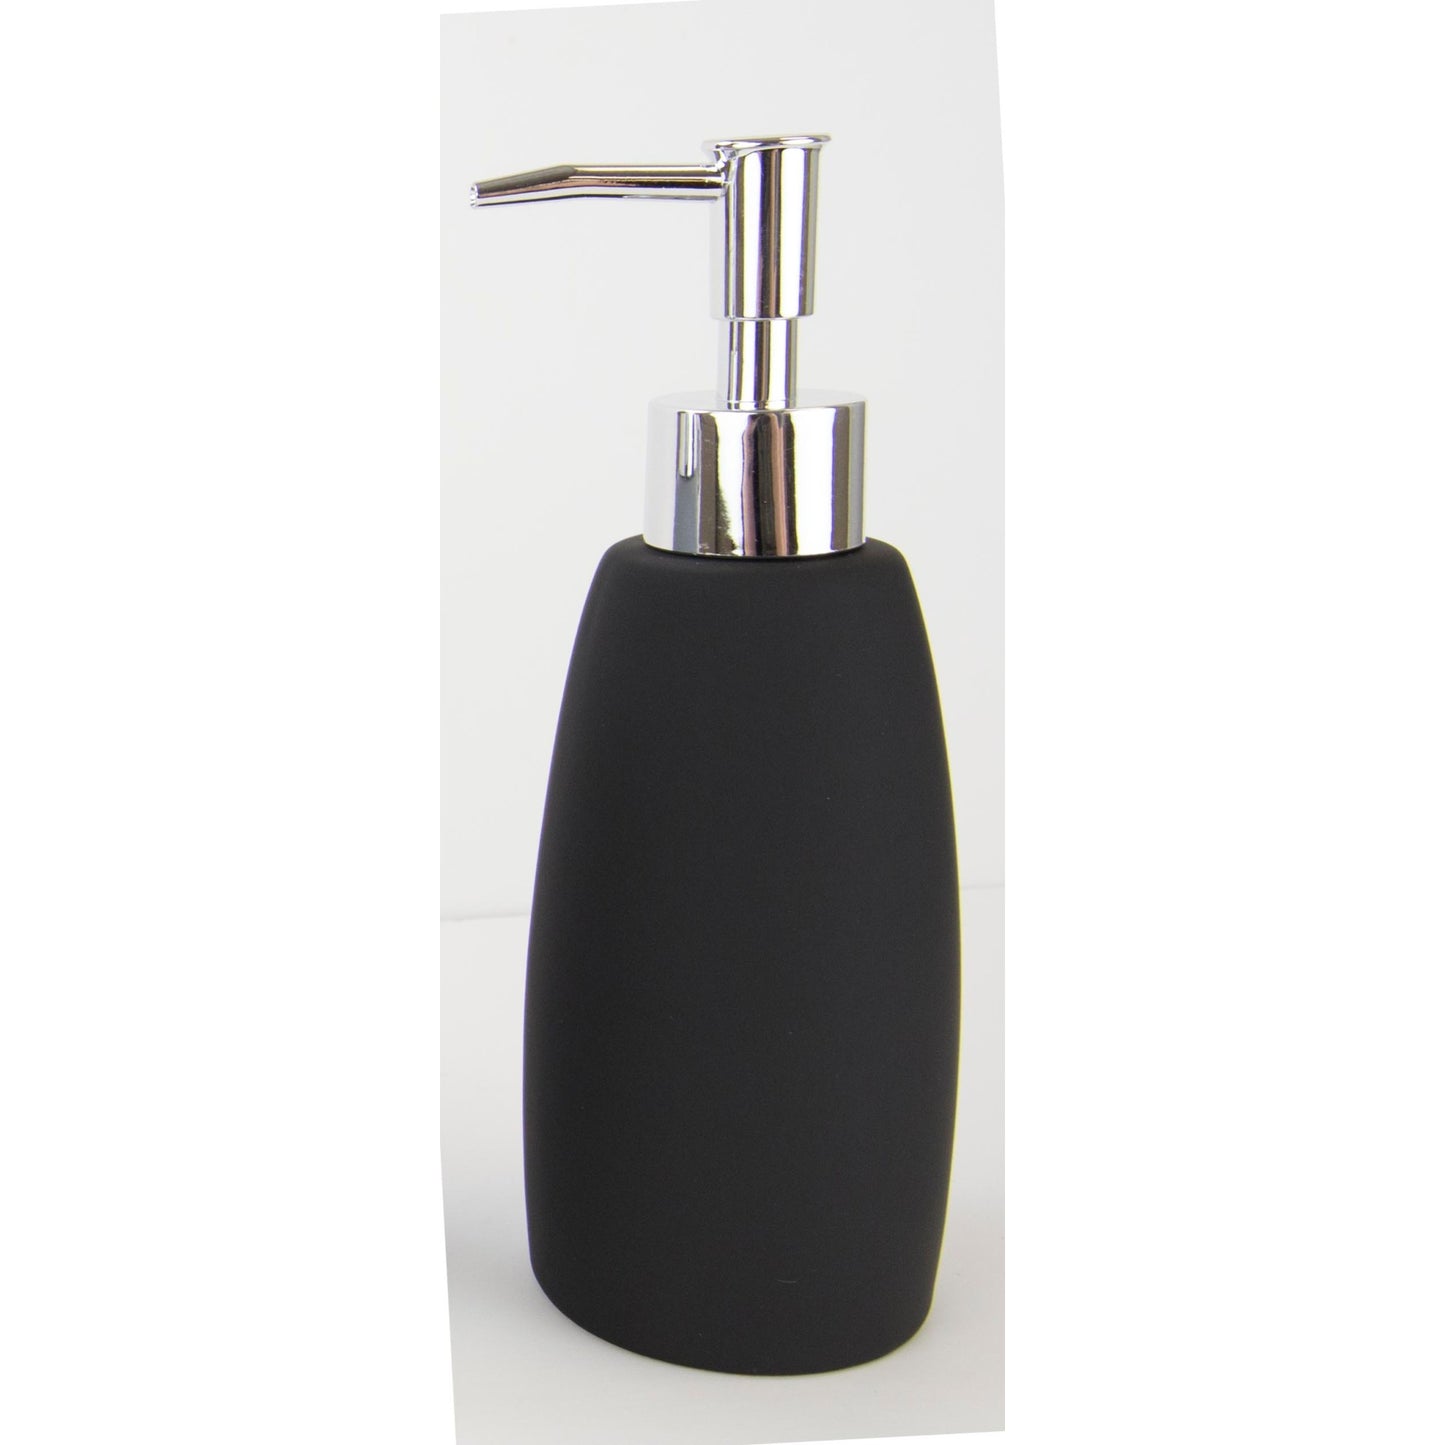 Home Basics Rubberized Ceramic Cylinder Soap Dispenser, Black - Black